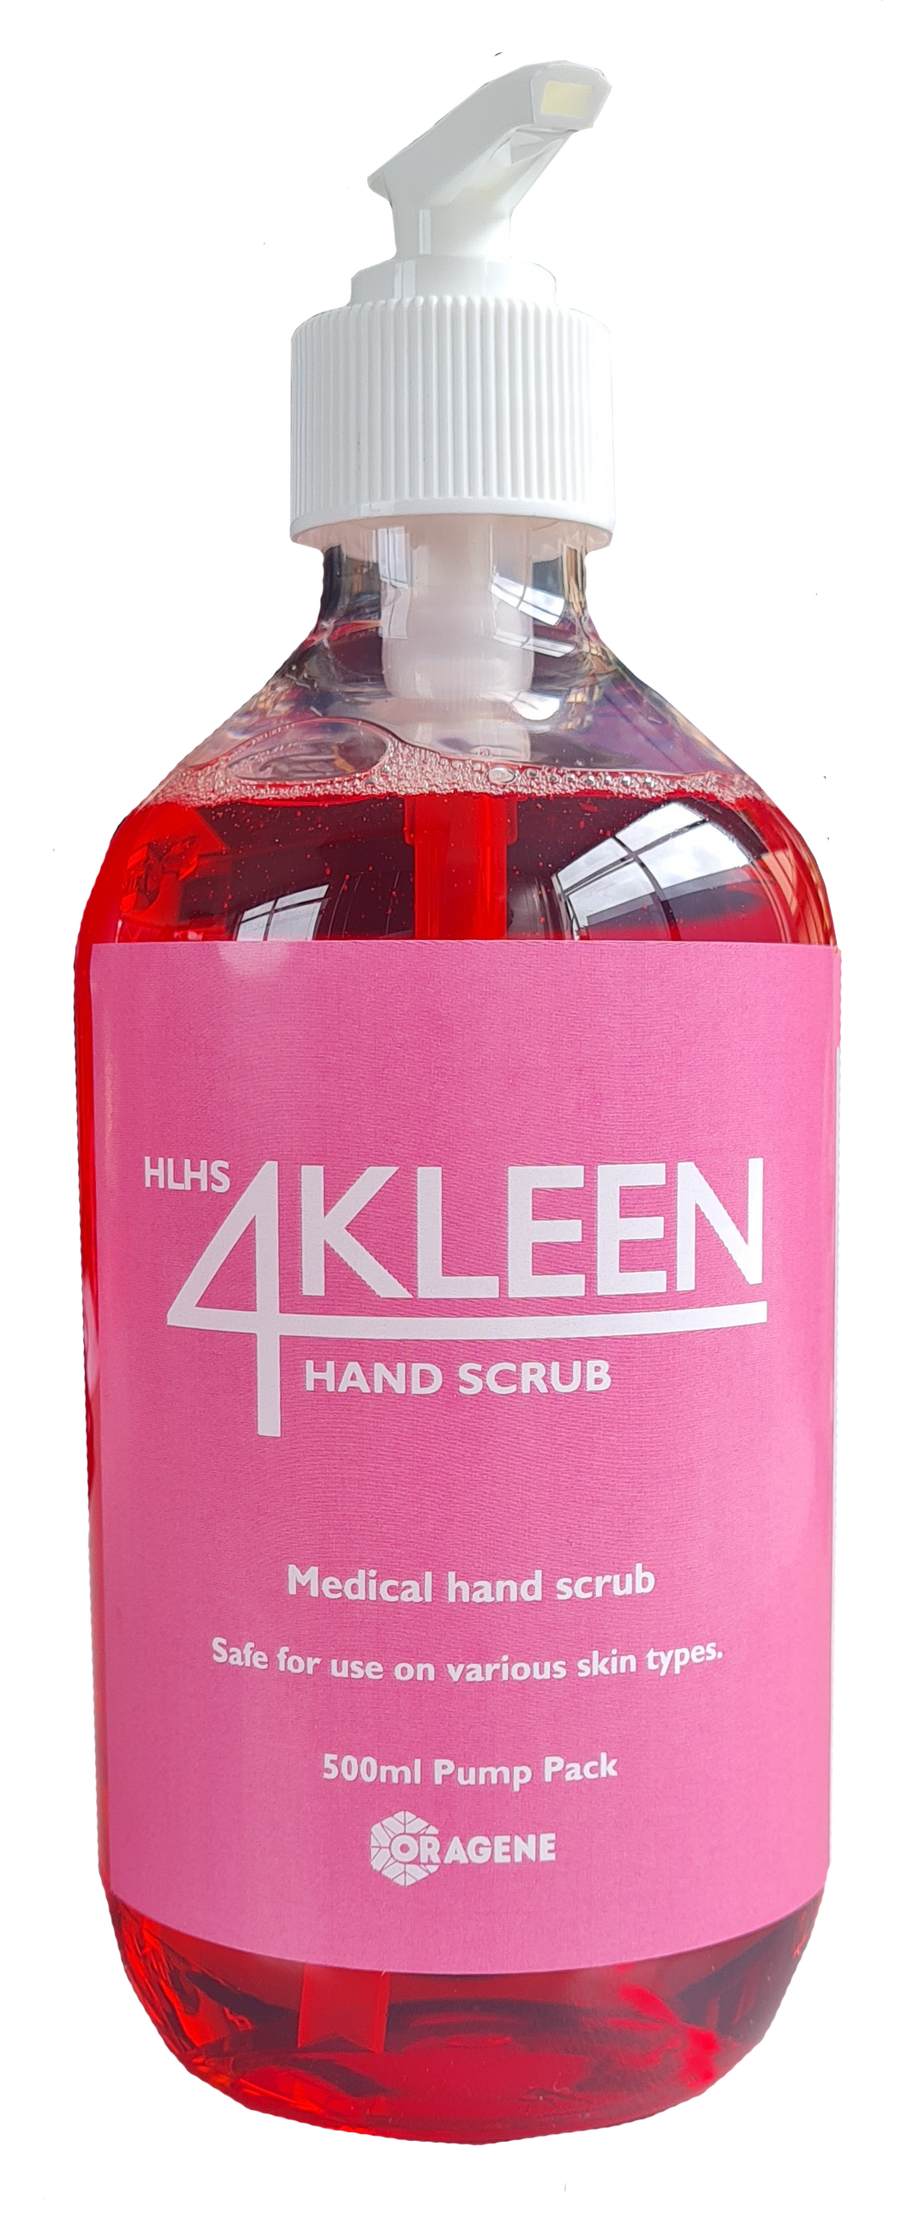 4KLEEN Hand Scrub - 500ml